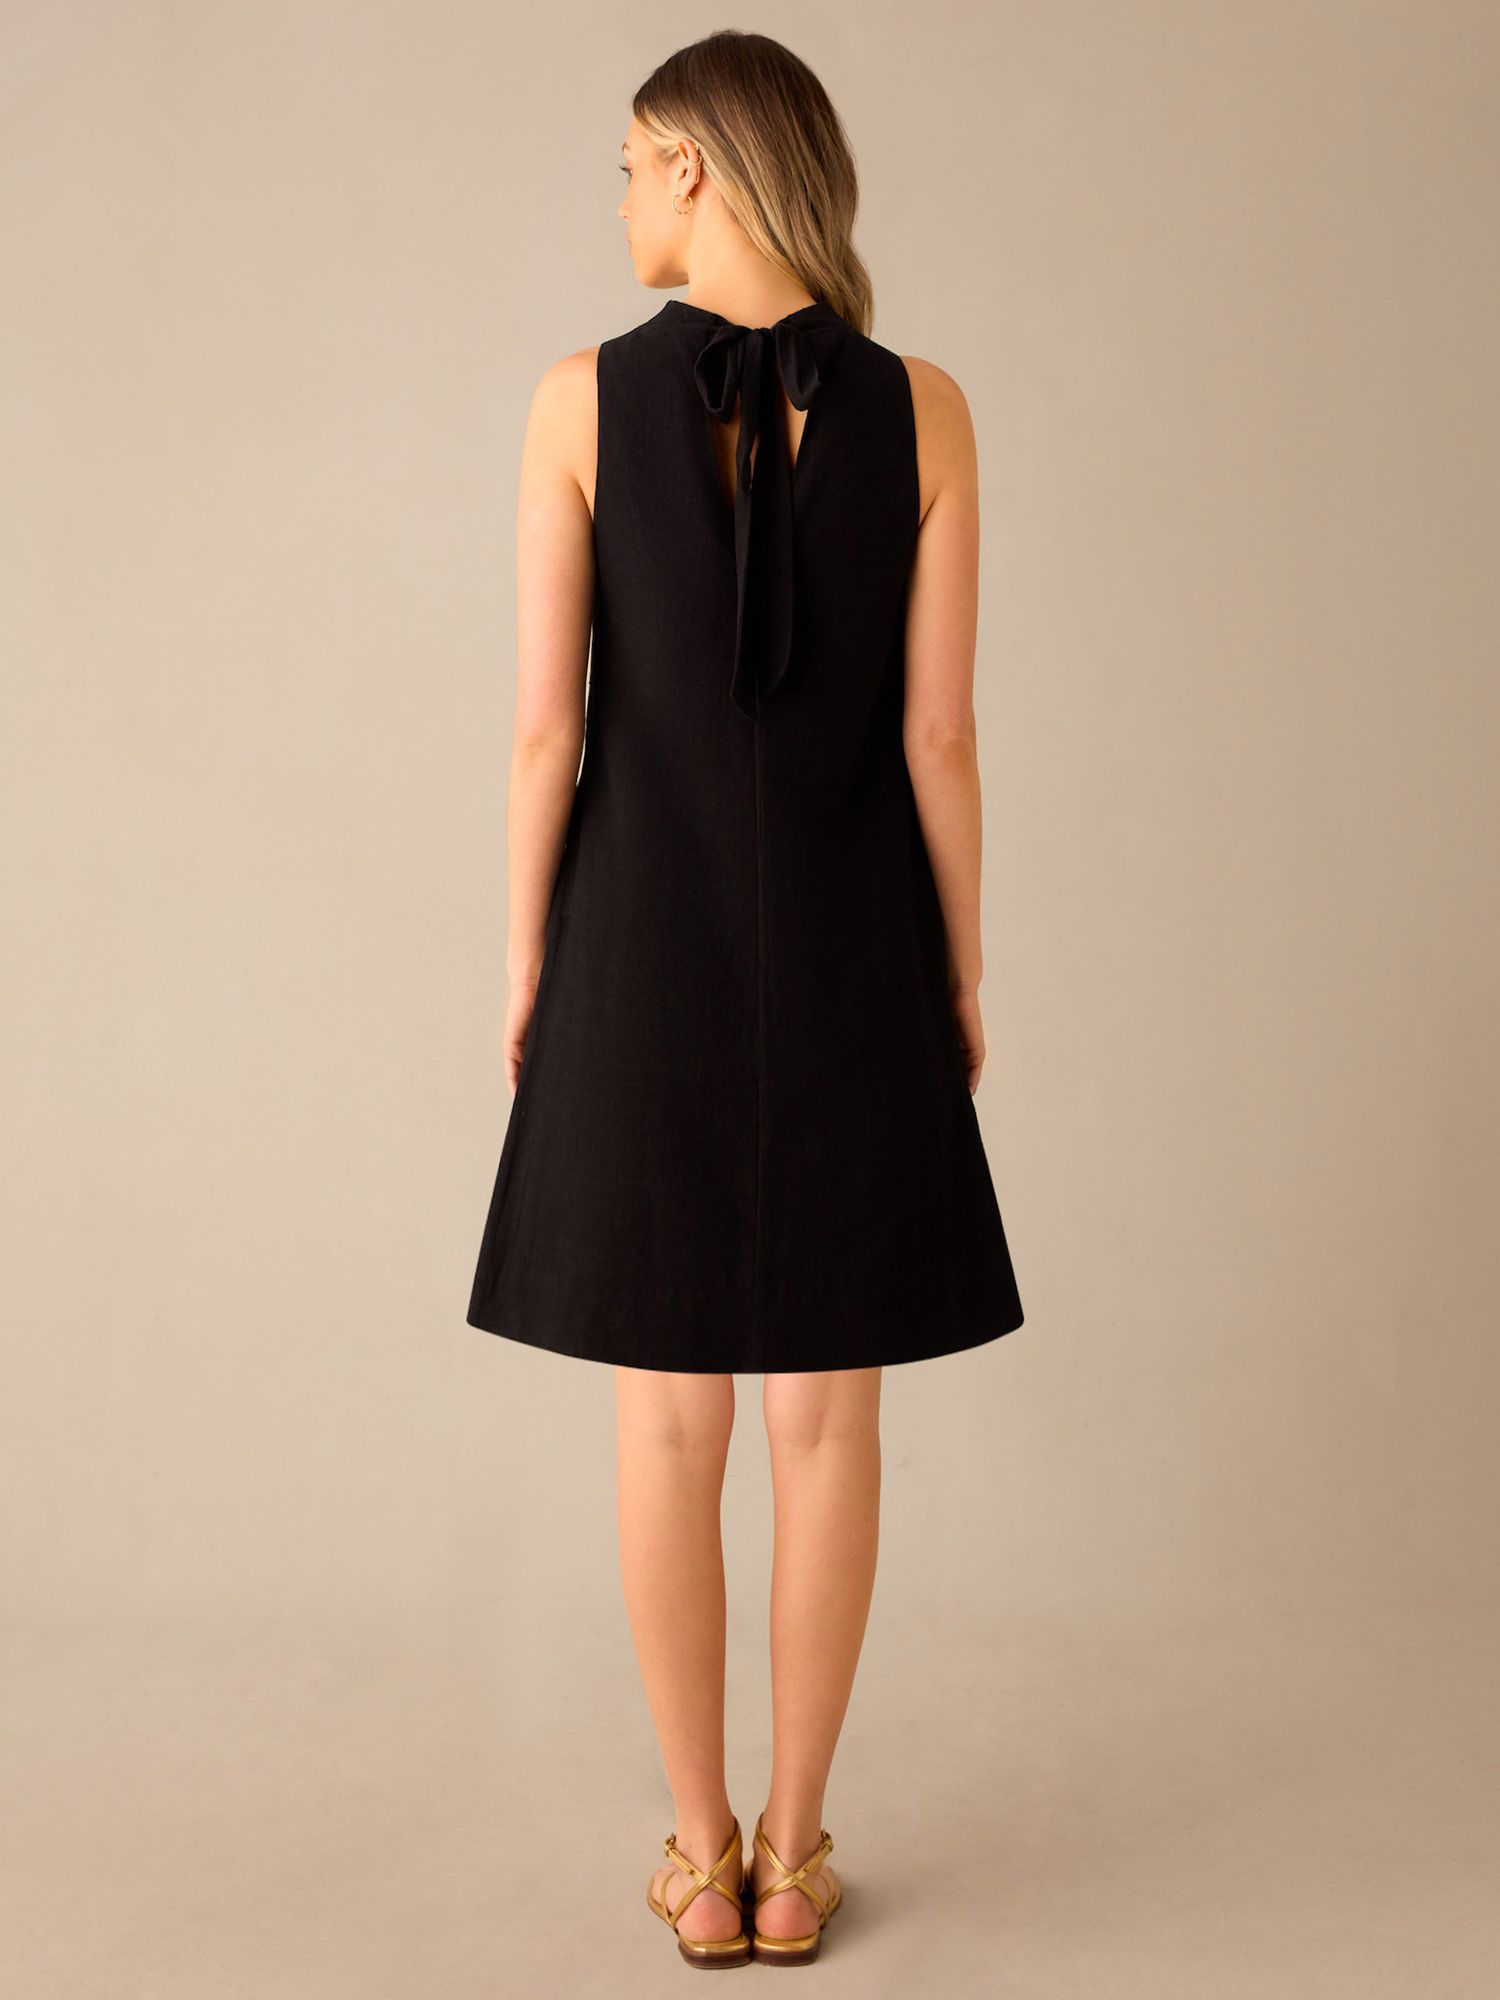 Ro&Zo High Cowl Neck Linen Blend Shift Dress, Black, 6